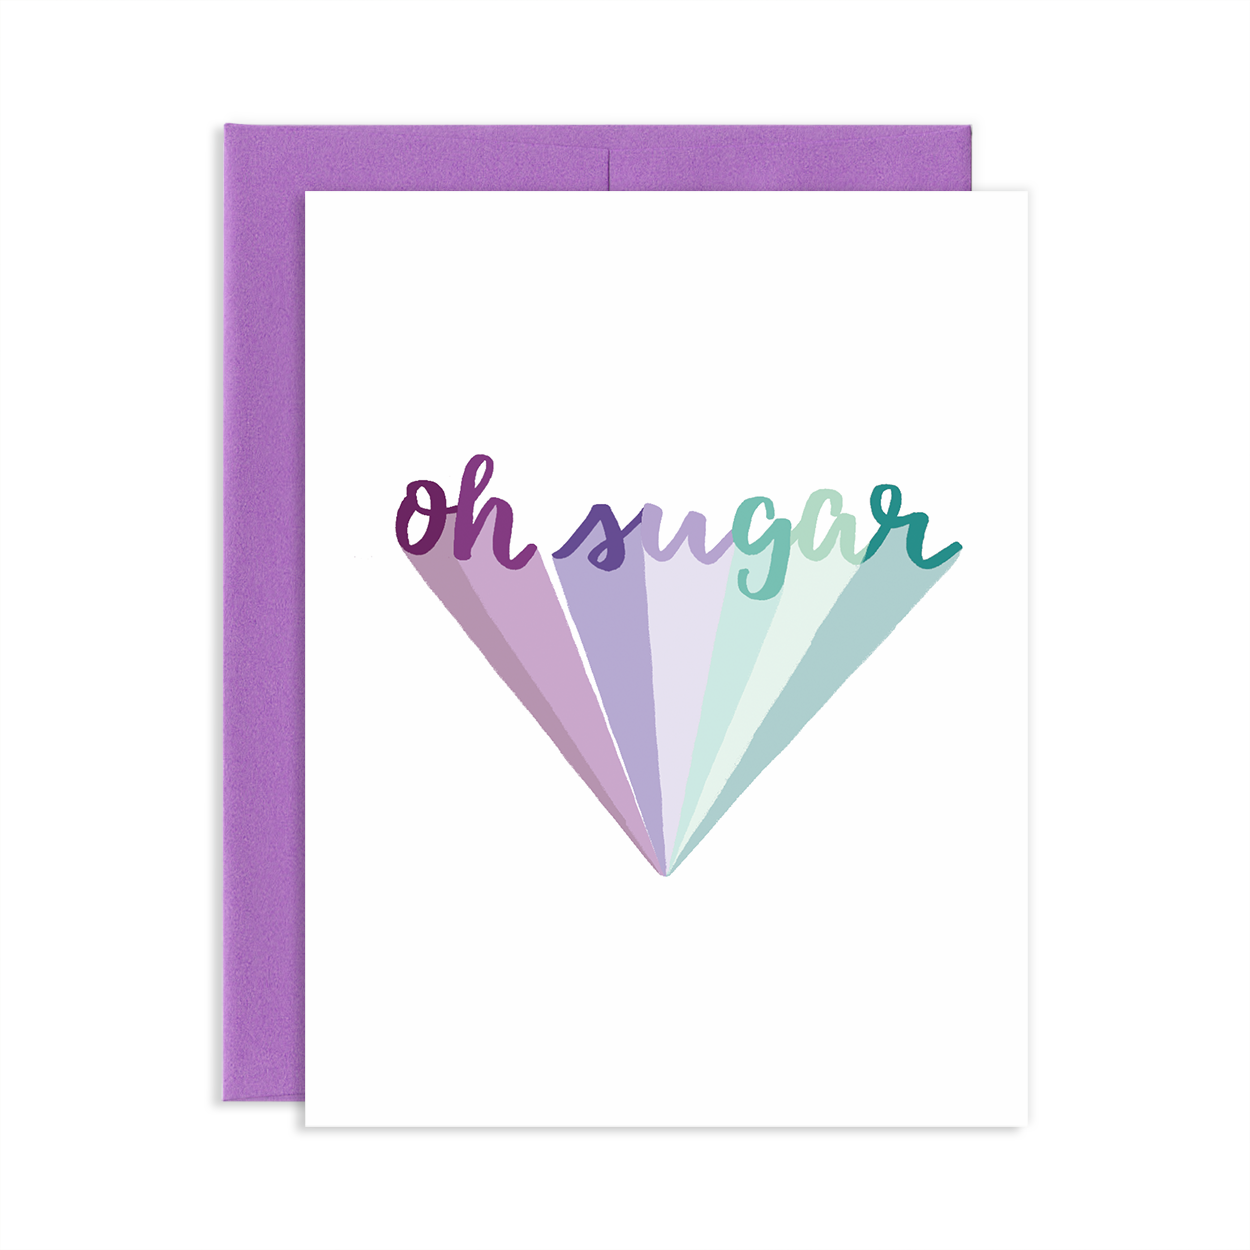 Oh Sugar Greeting Card | Old Logo